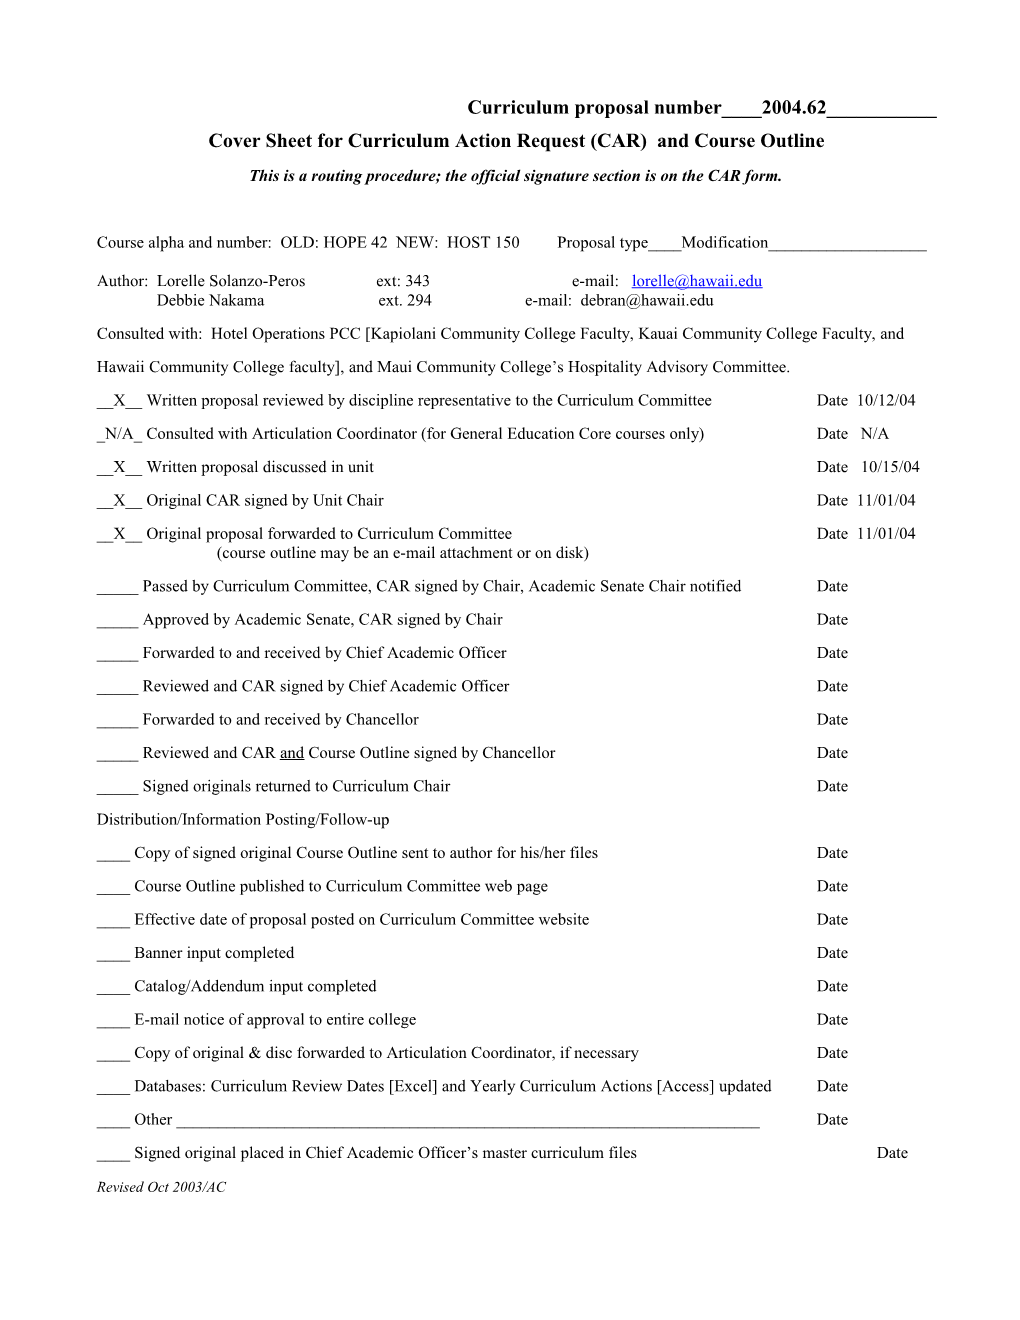 Curriculum Action Request (CAR) (Form 4-93) - Maui Community College